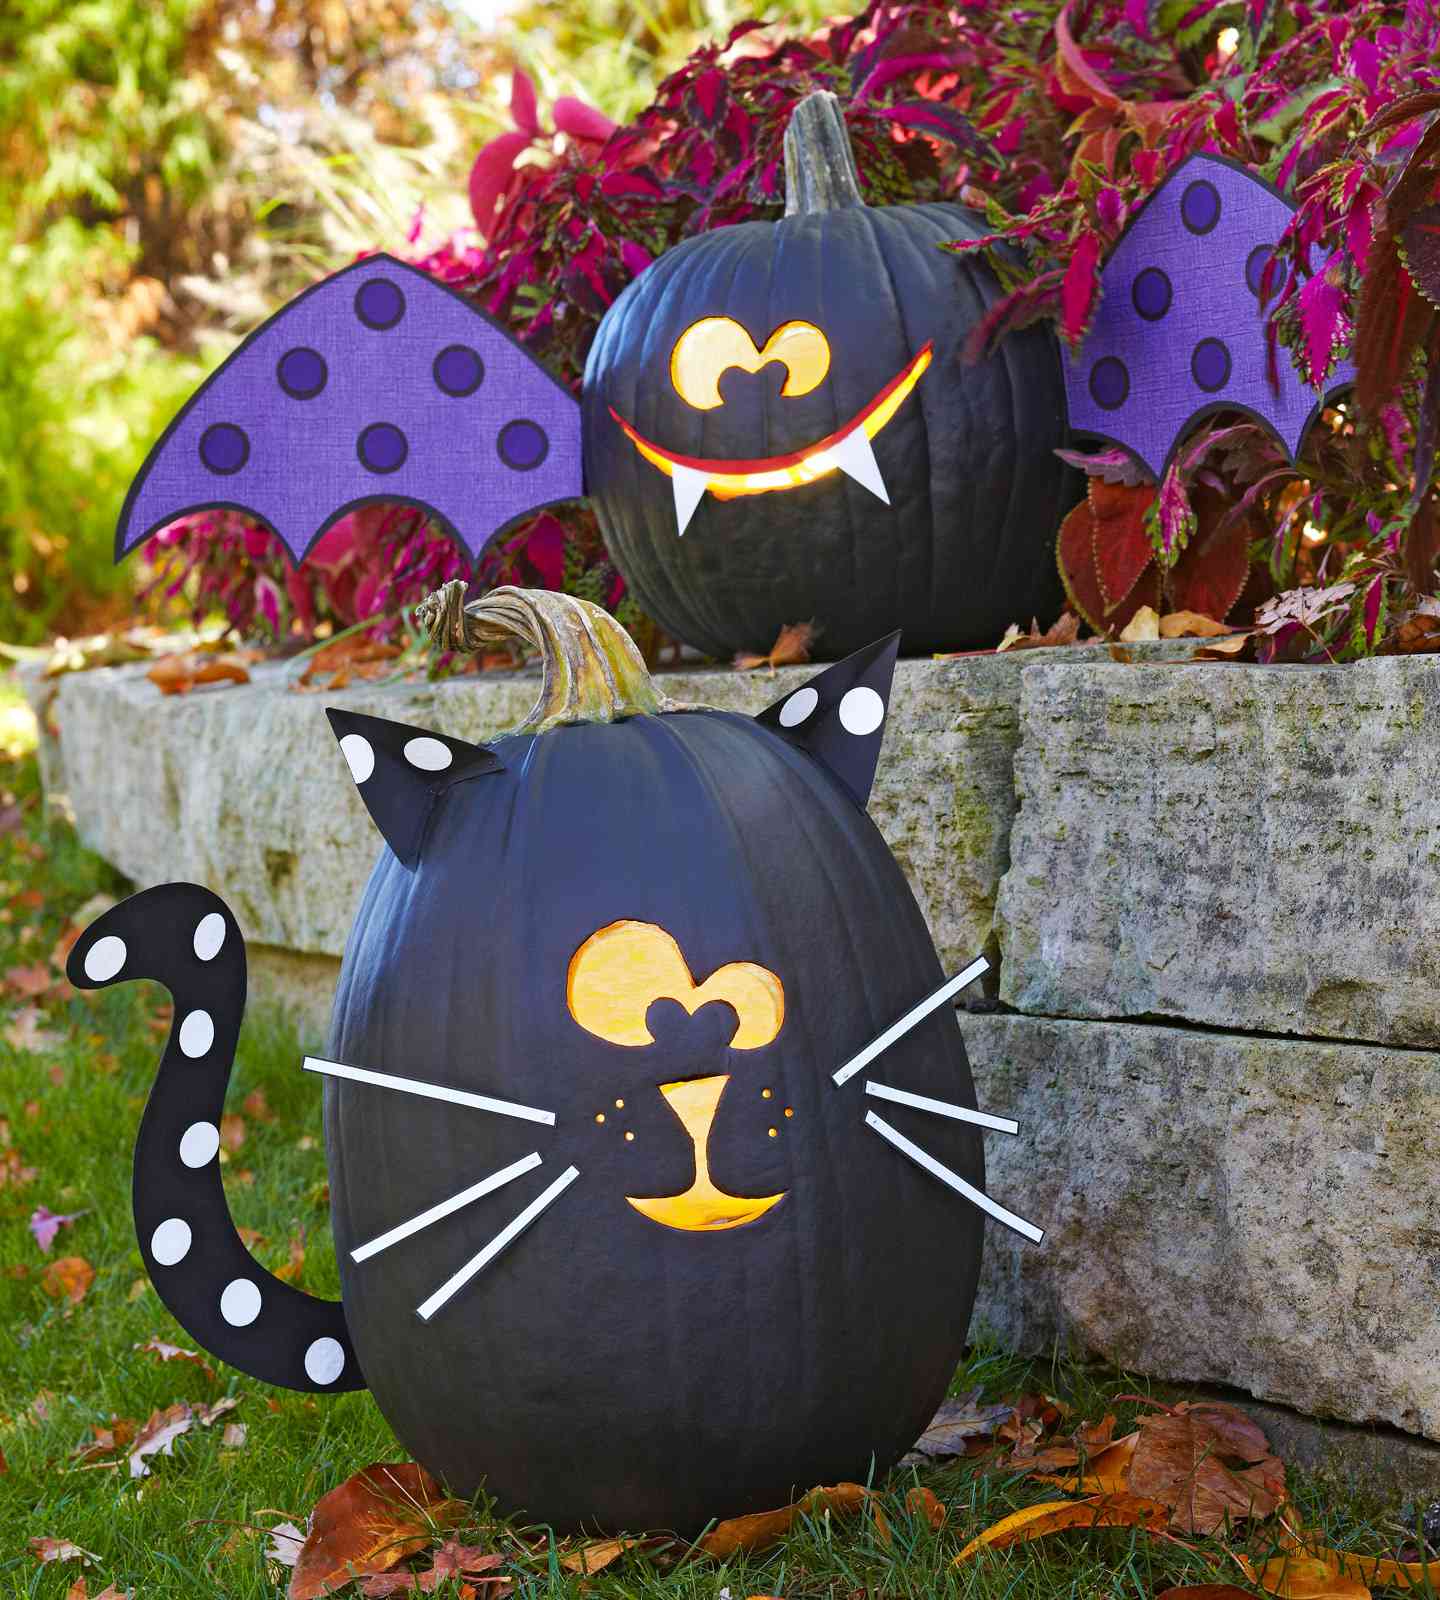 Black Cat and Bat Painted Pumpkins